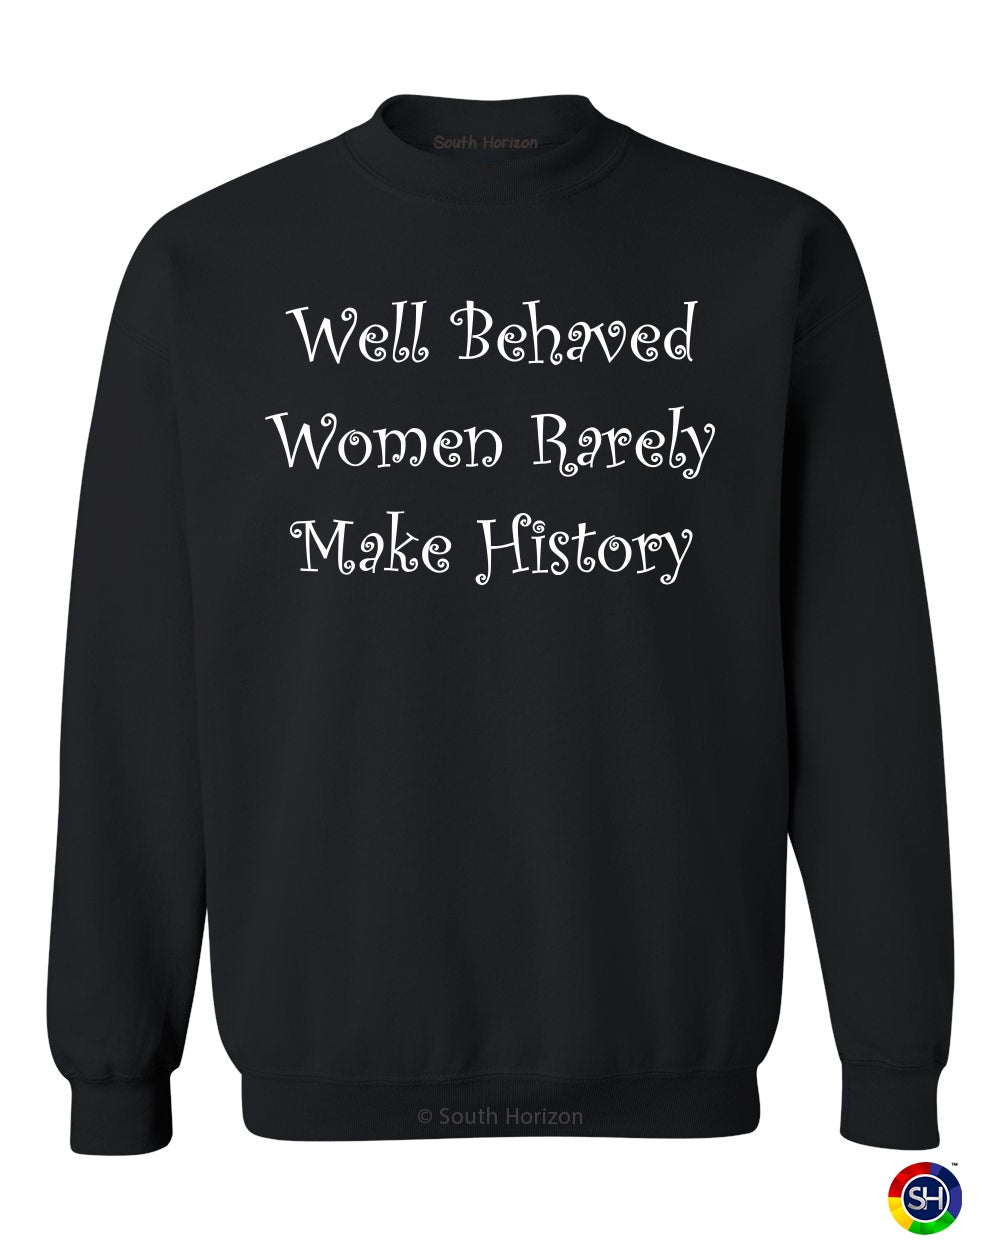 Well Behaved Women Rarely Make History on SweatShirt (#487-11)